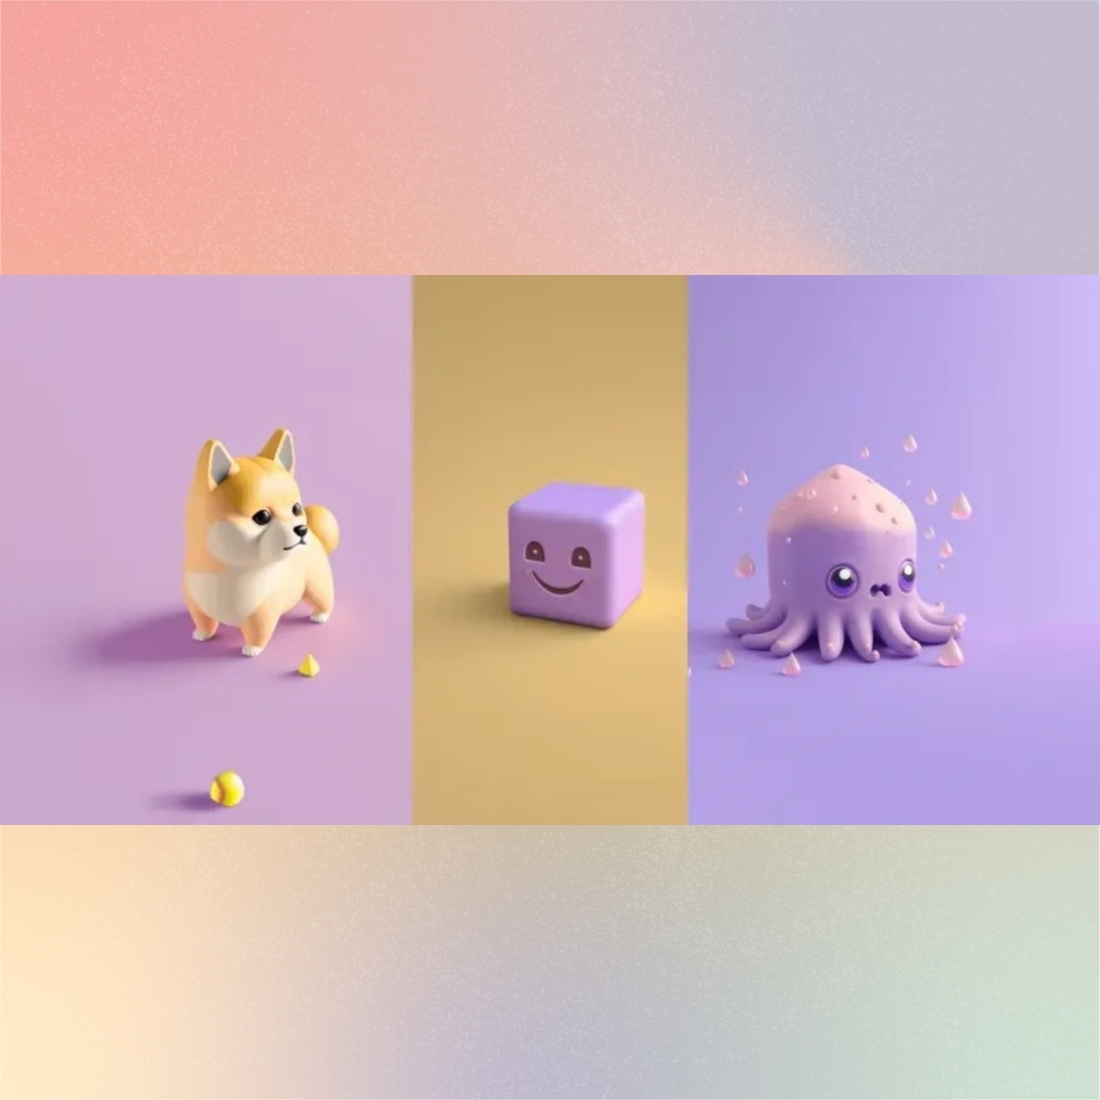 Pastel Clay Emojis cover image.